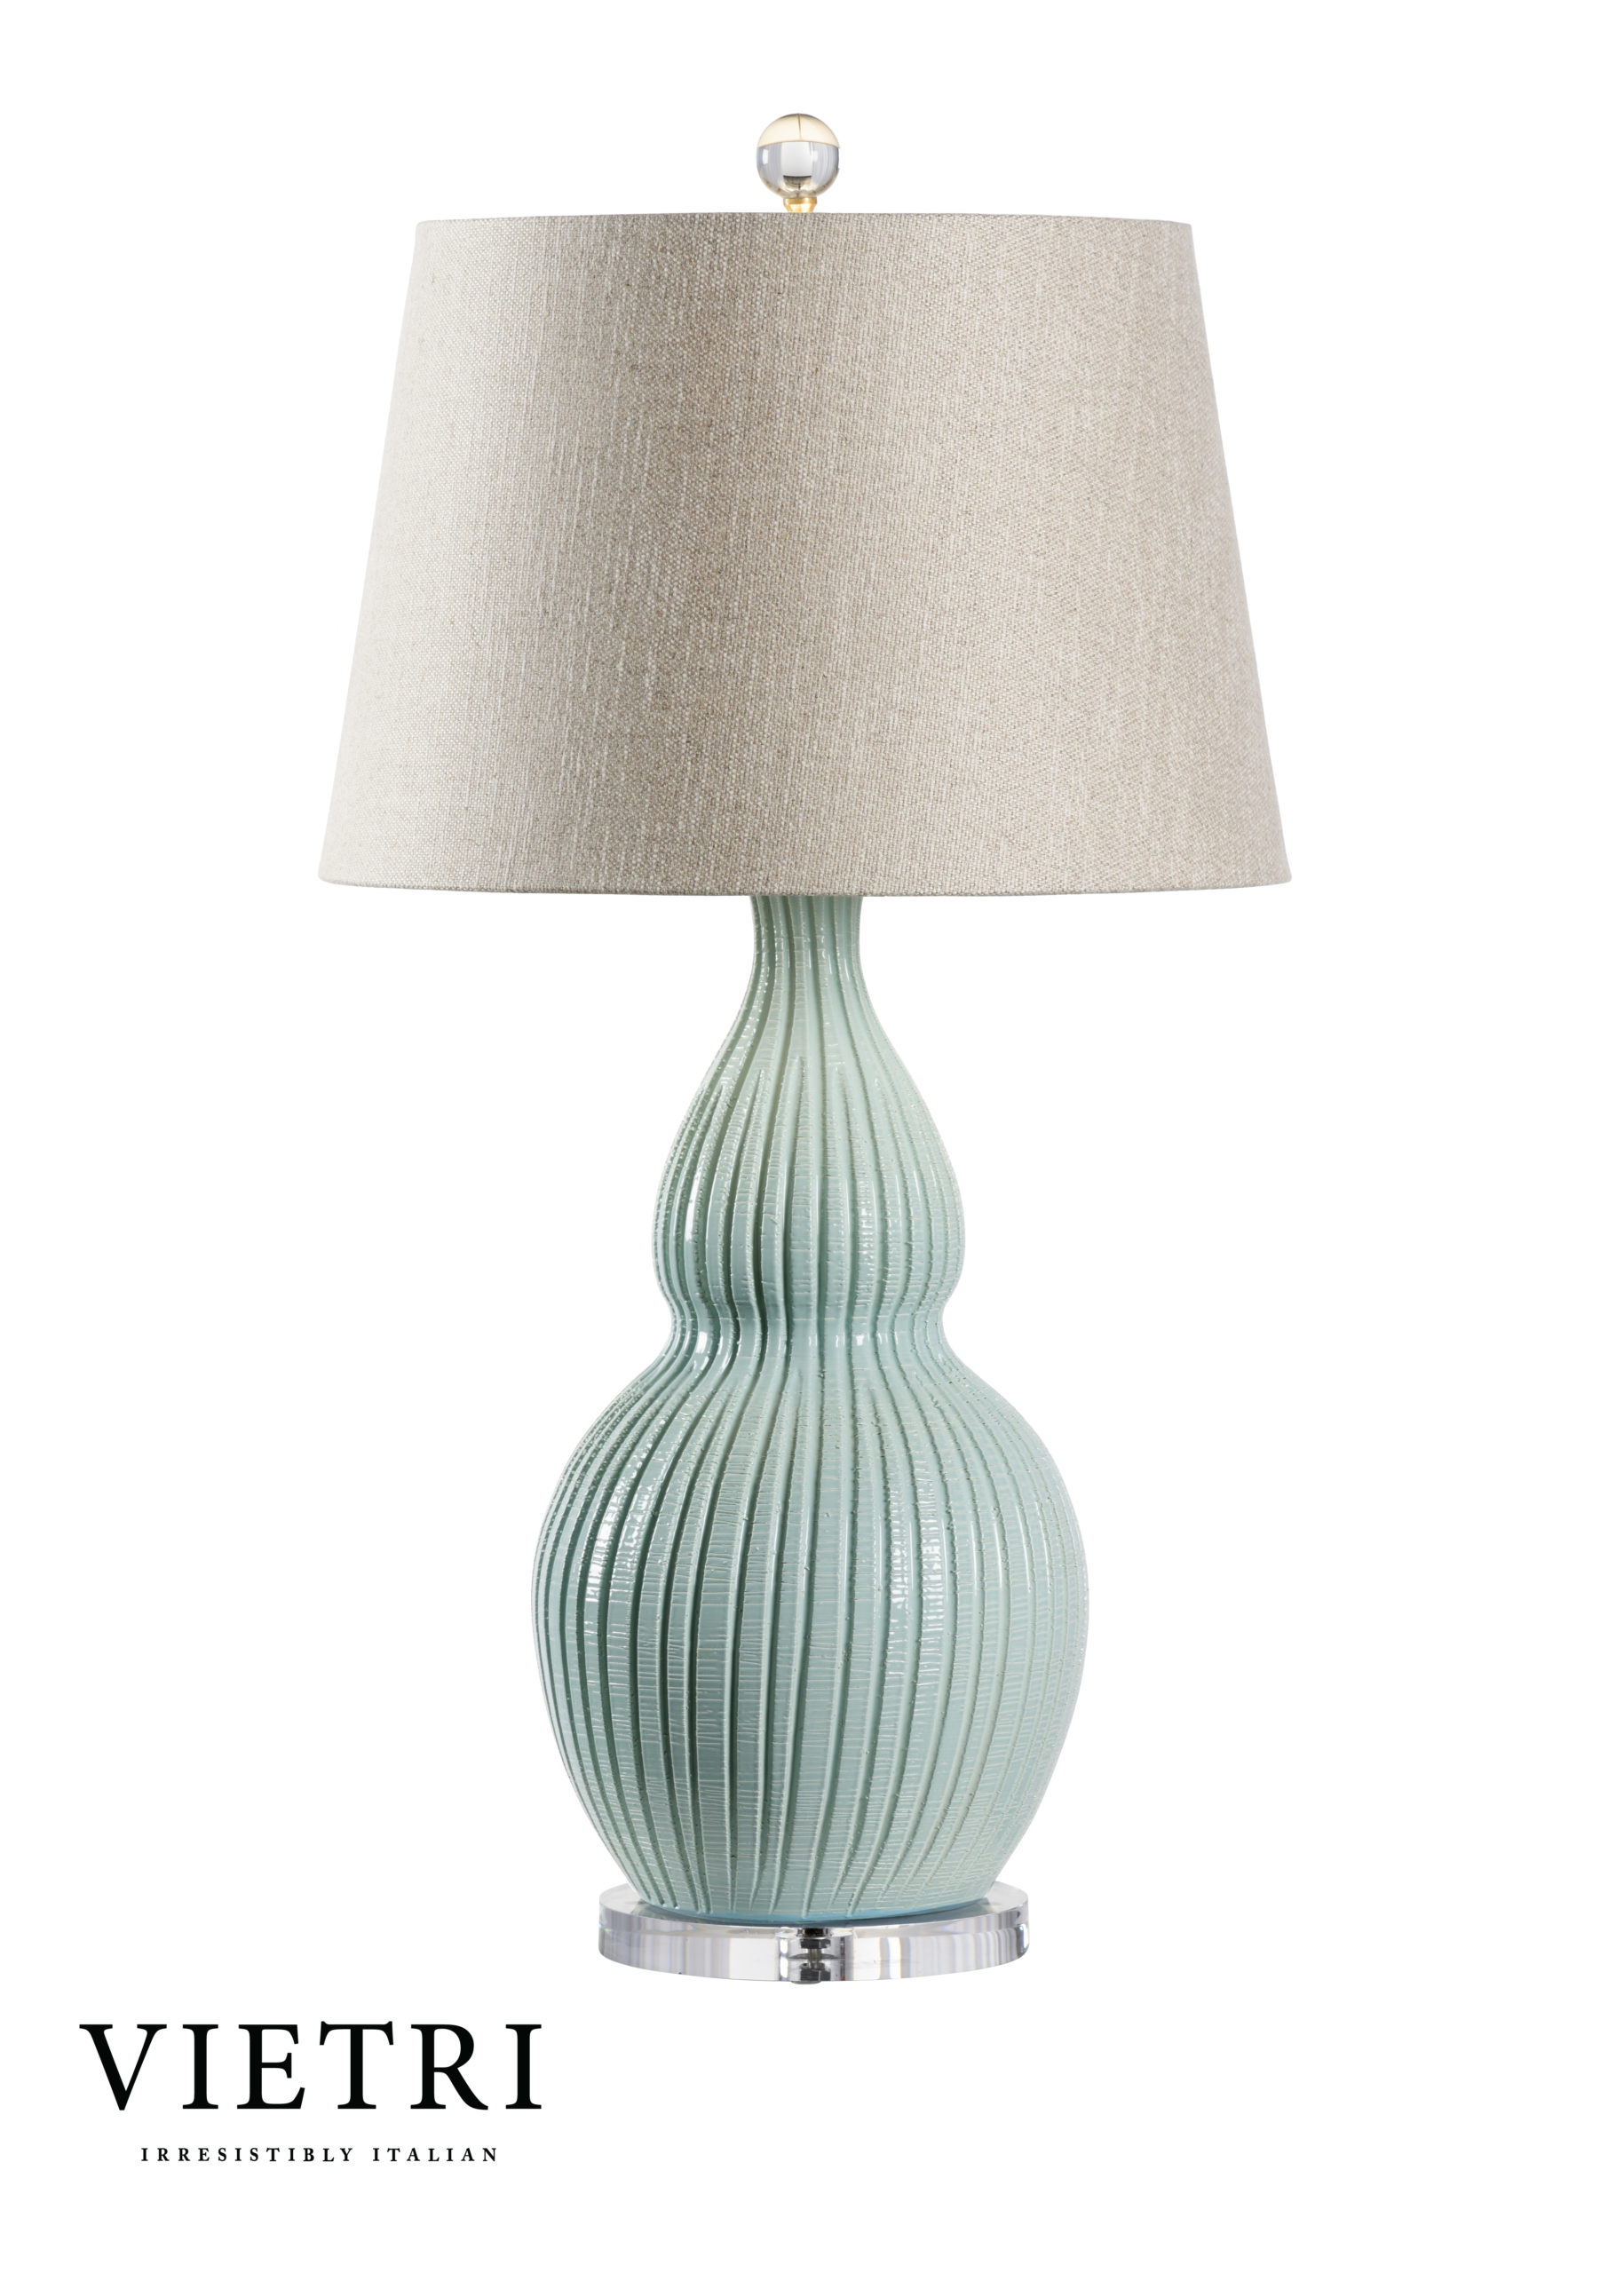 Ventura Lamp - Mint